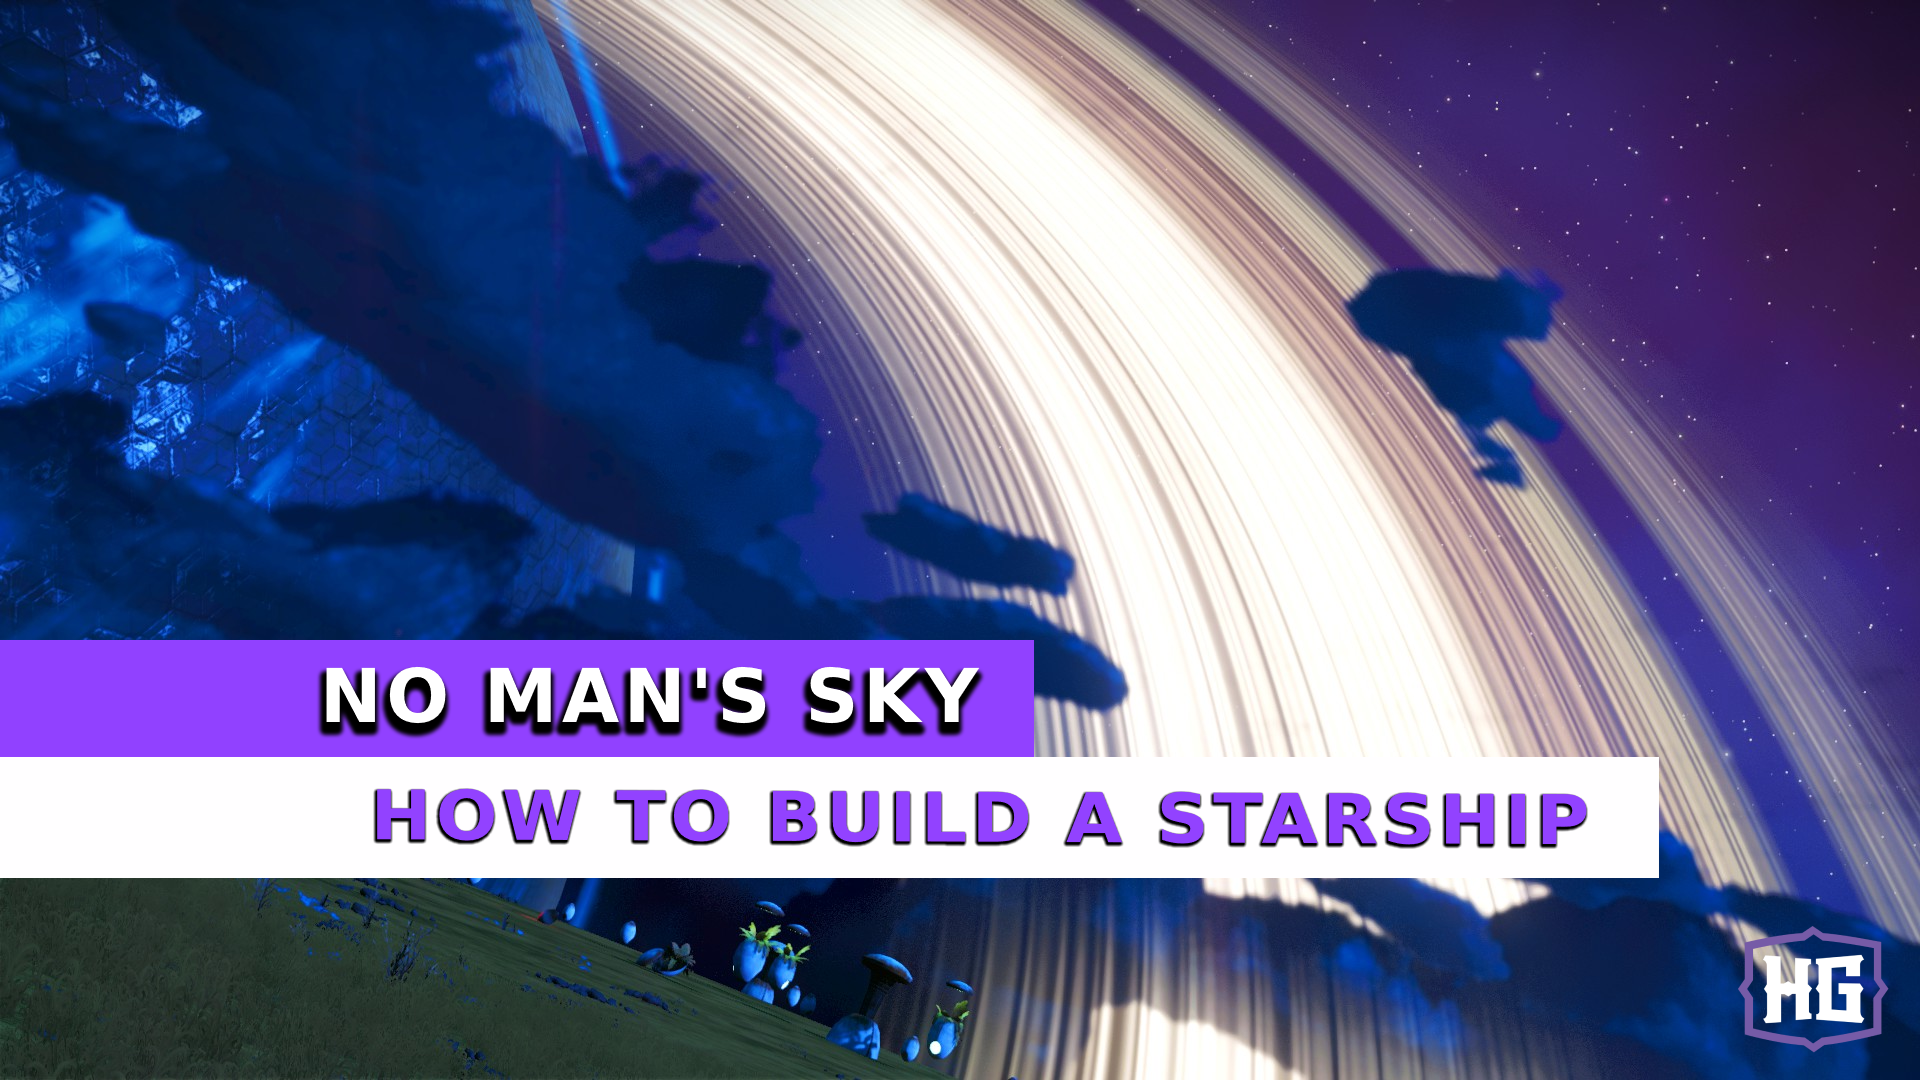 No Man's Sky How to Build a Starship